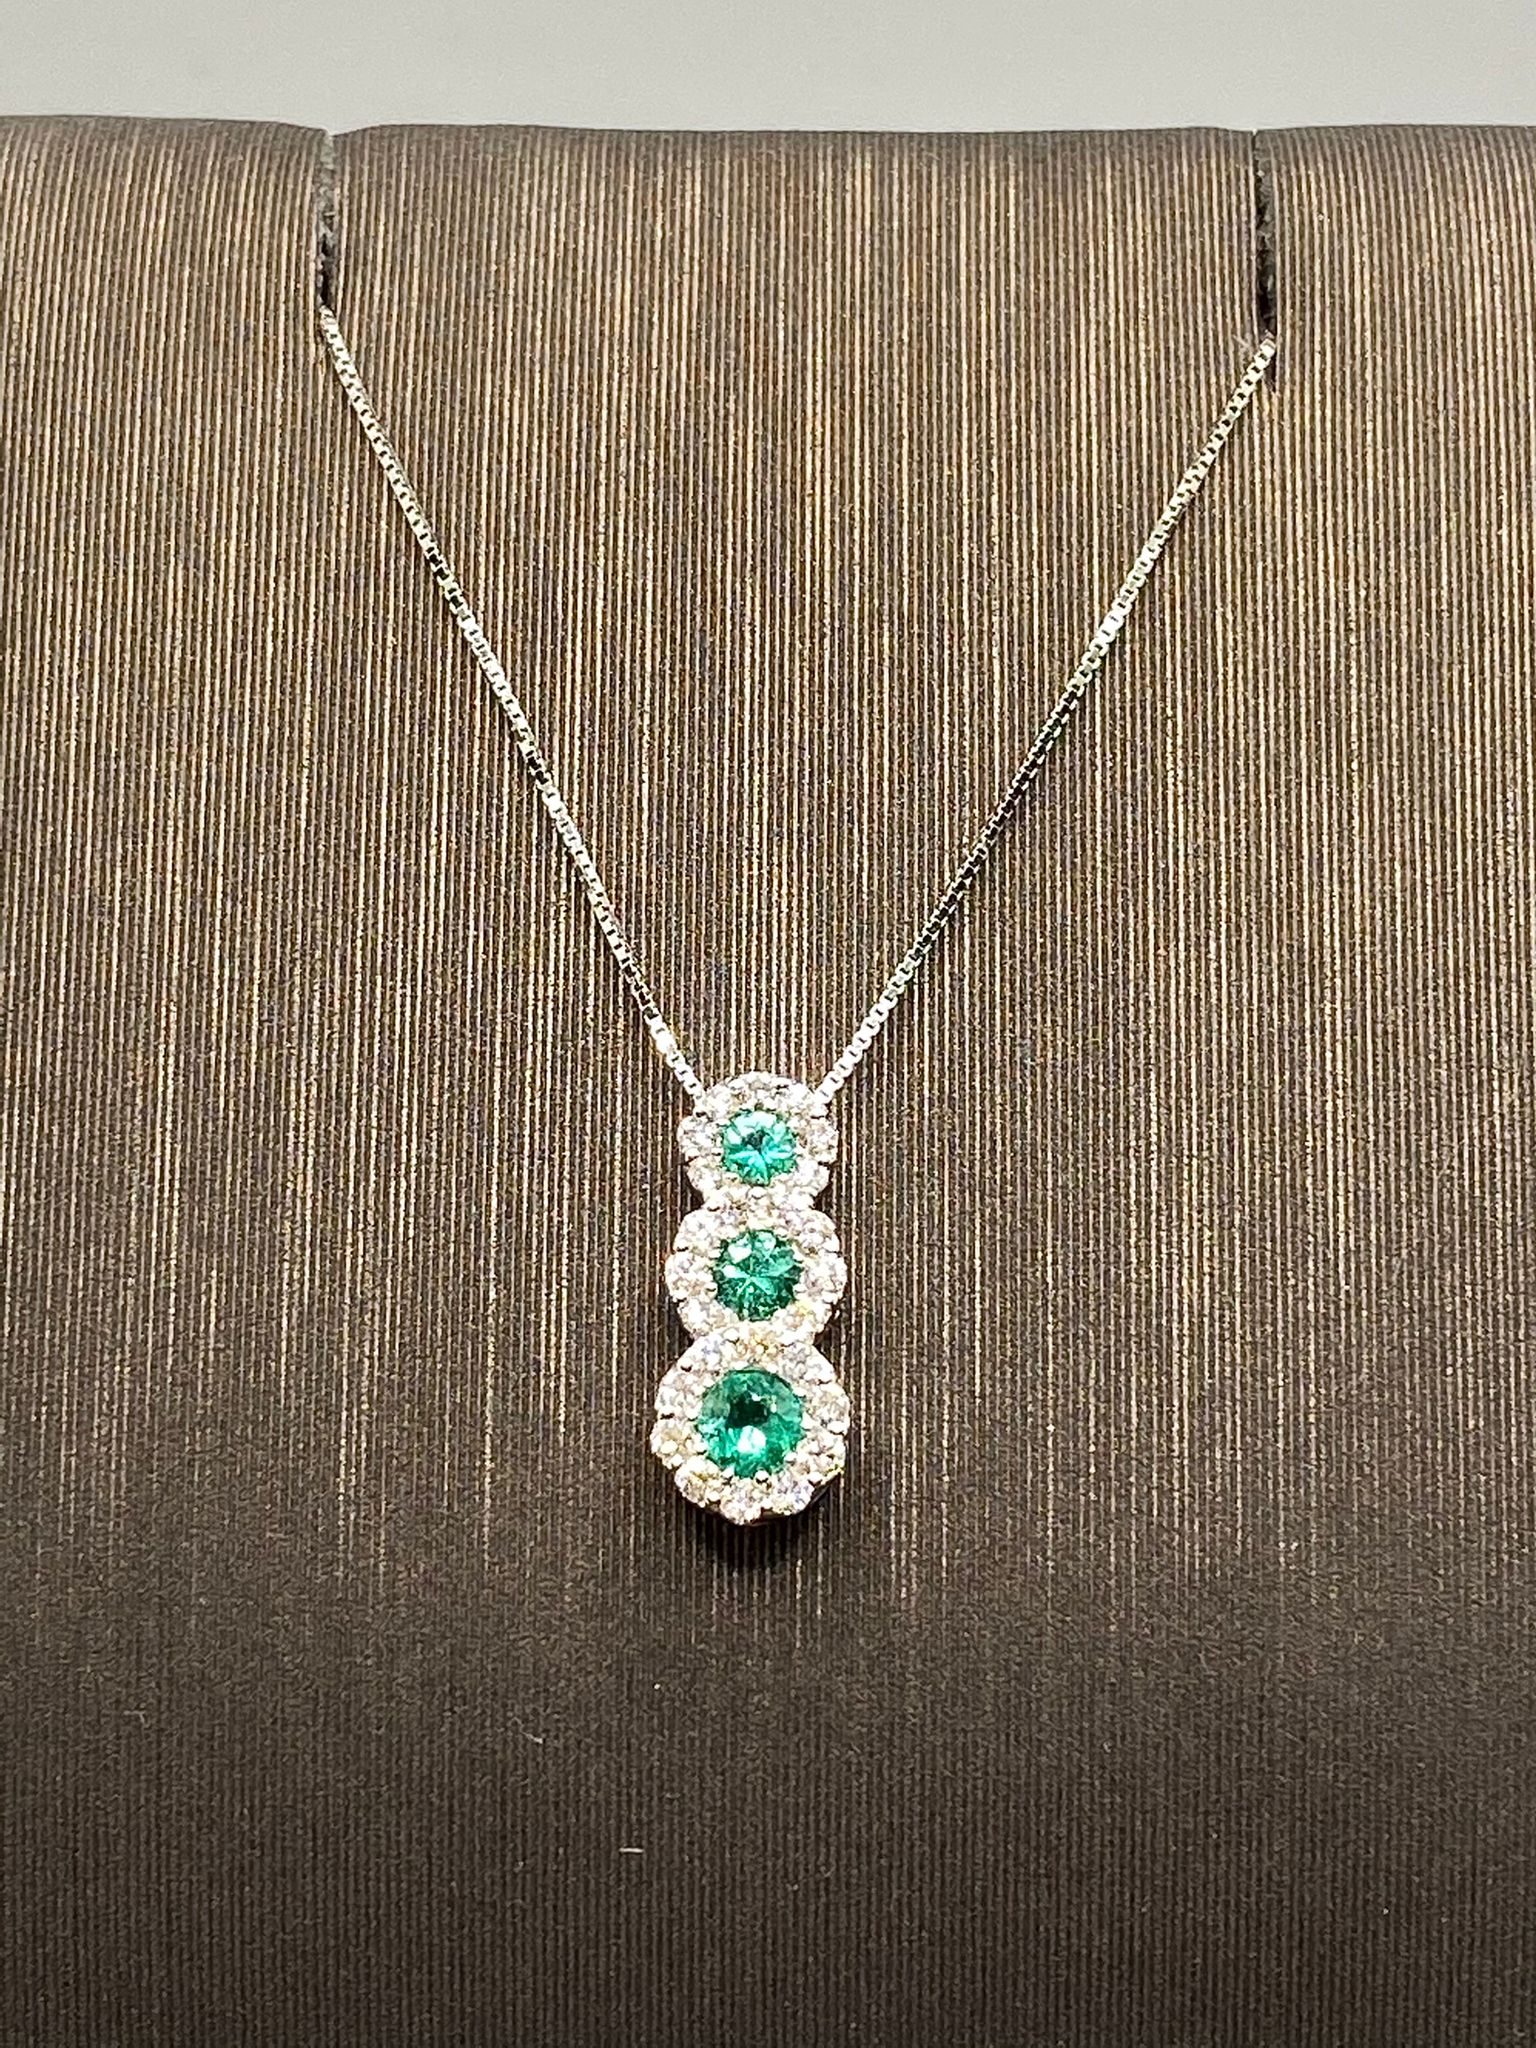 trilogy pendant white gold 750% emeralds 0.24 ct diamonds 0.23 ct color/ purity F/VVS1